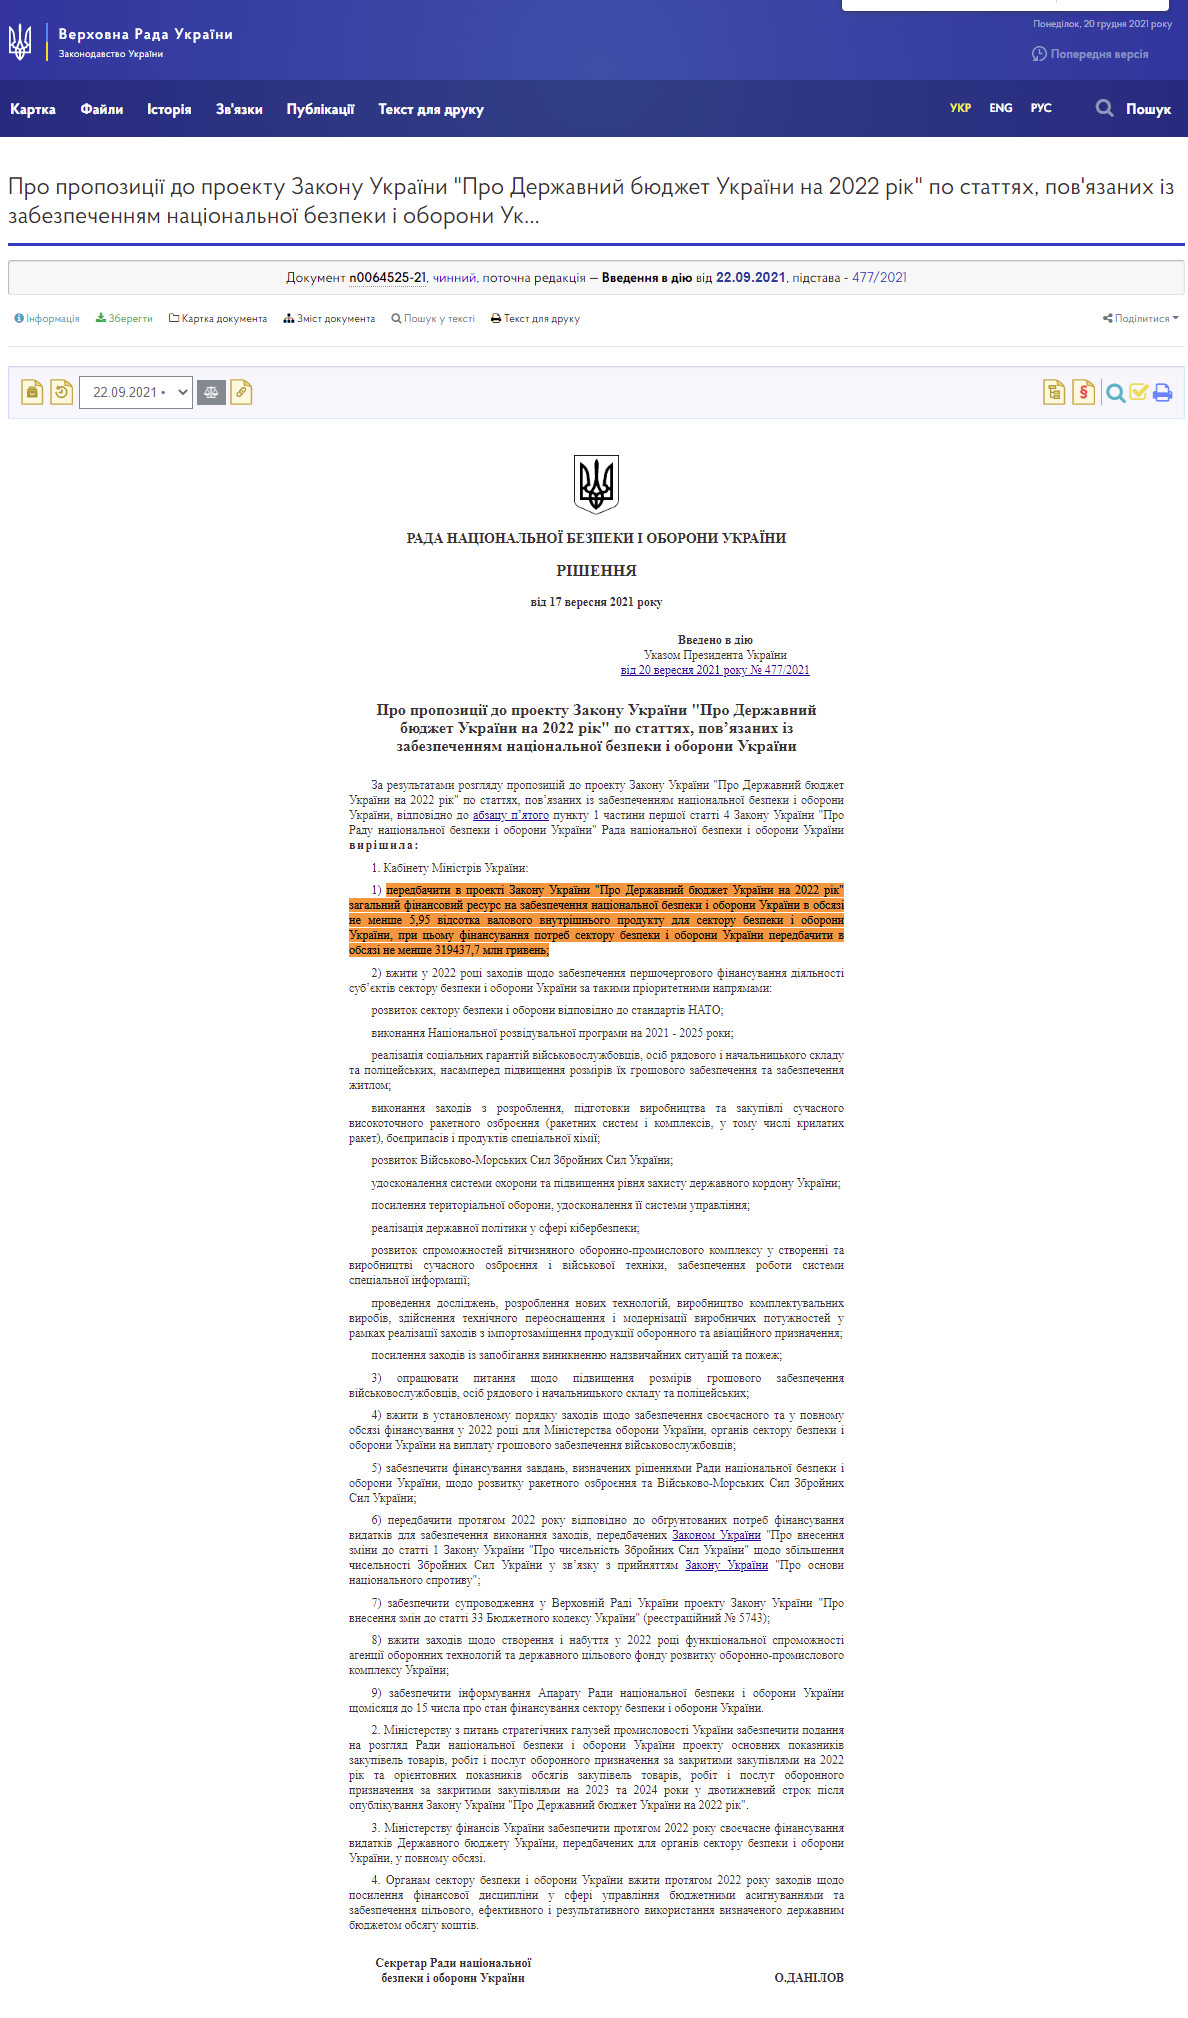 https://zakon.rada.gov.ua/laws/show/n0064525-21#Text